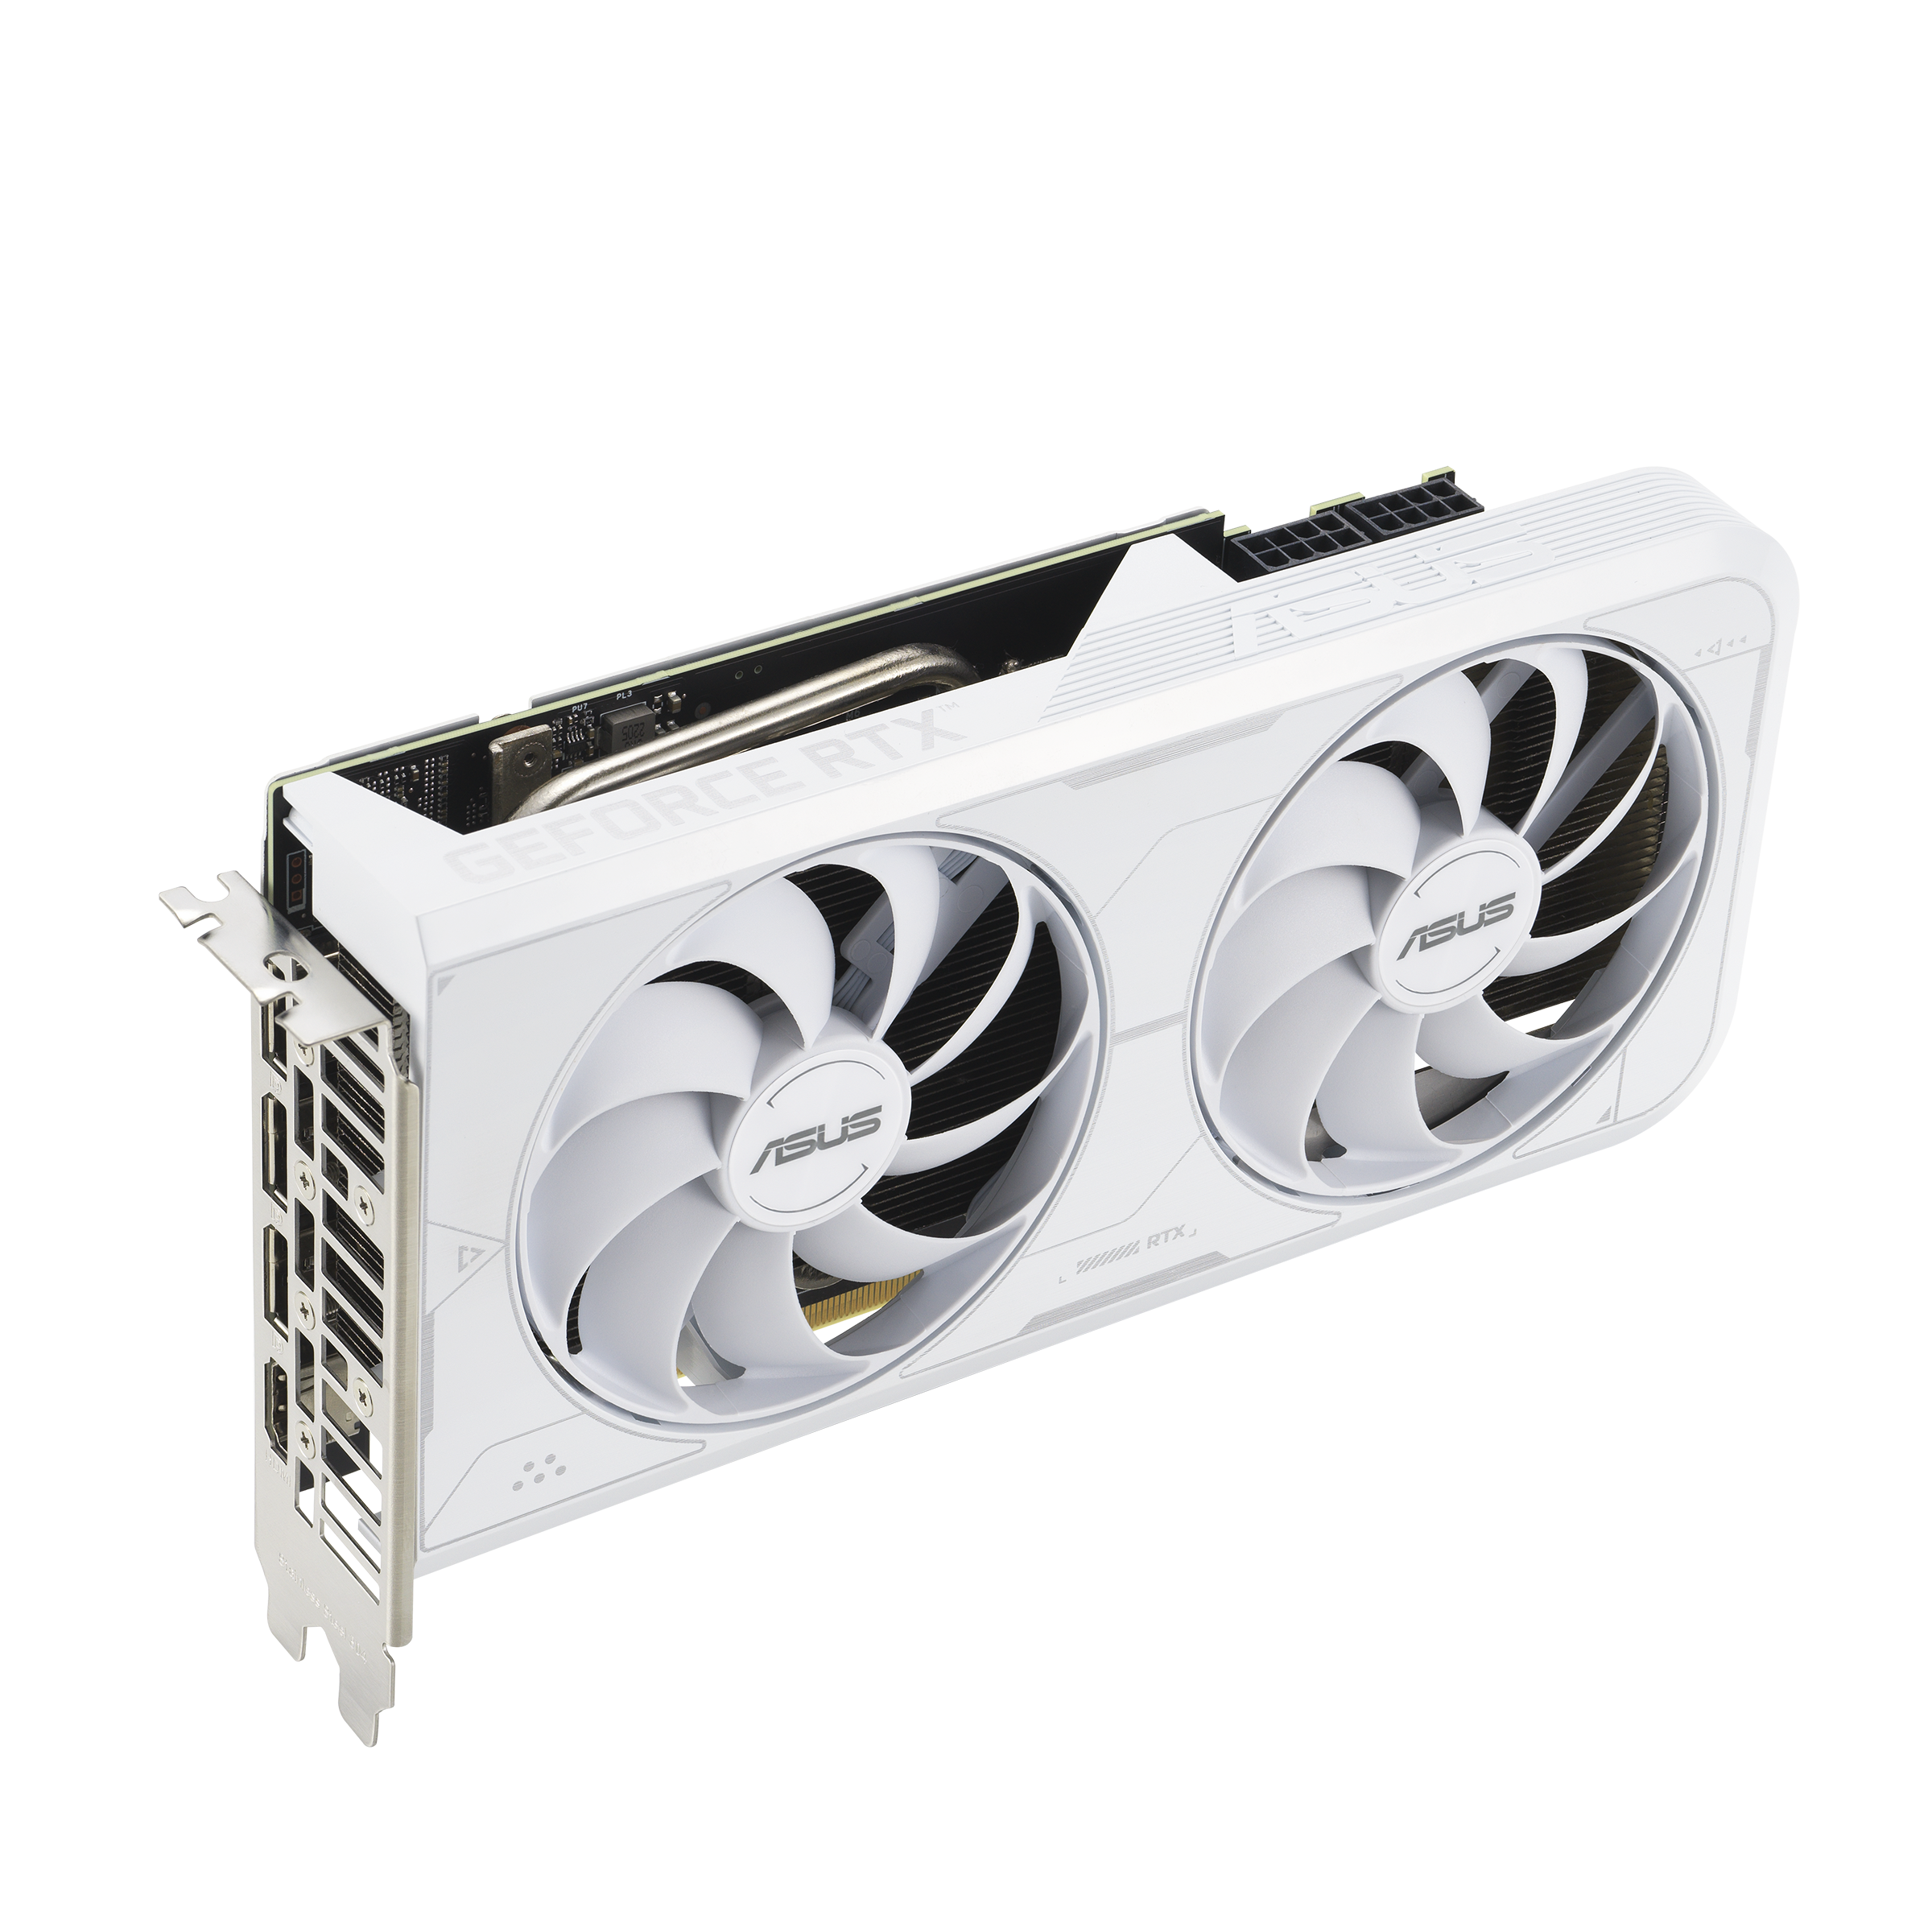 ASUS Dual GeForce RTX 3060 Ti OC WHITE使用頻度は月に1回程です